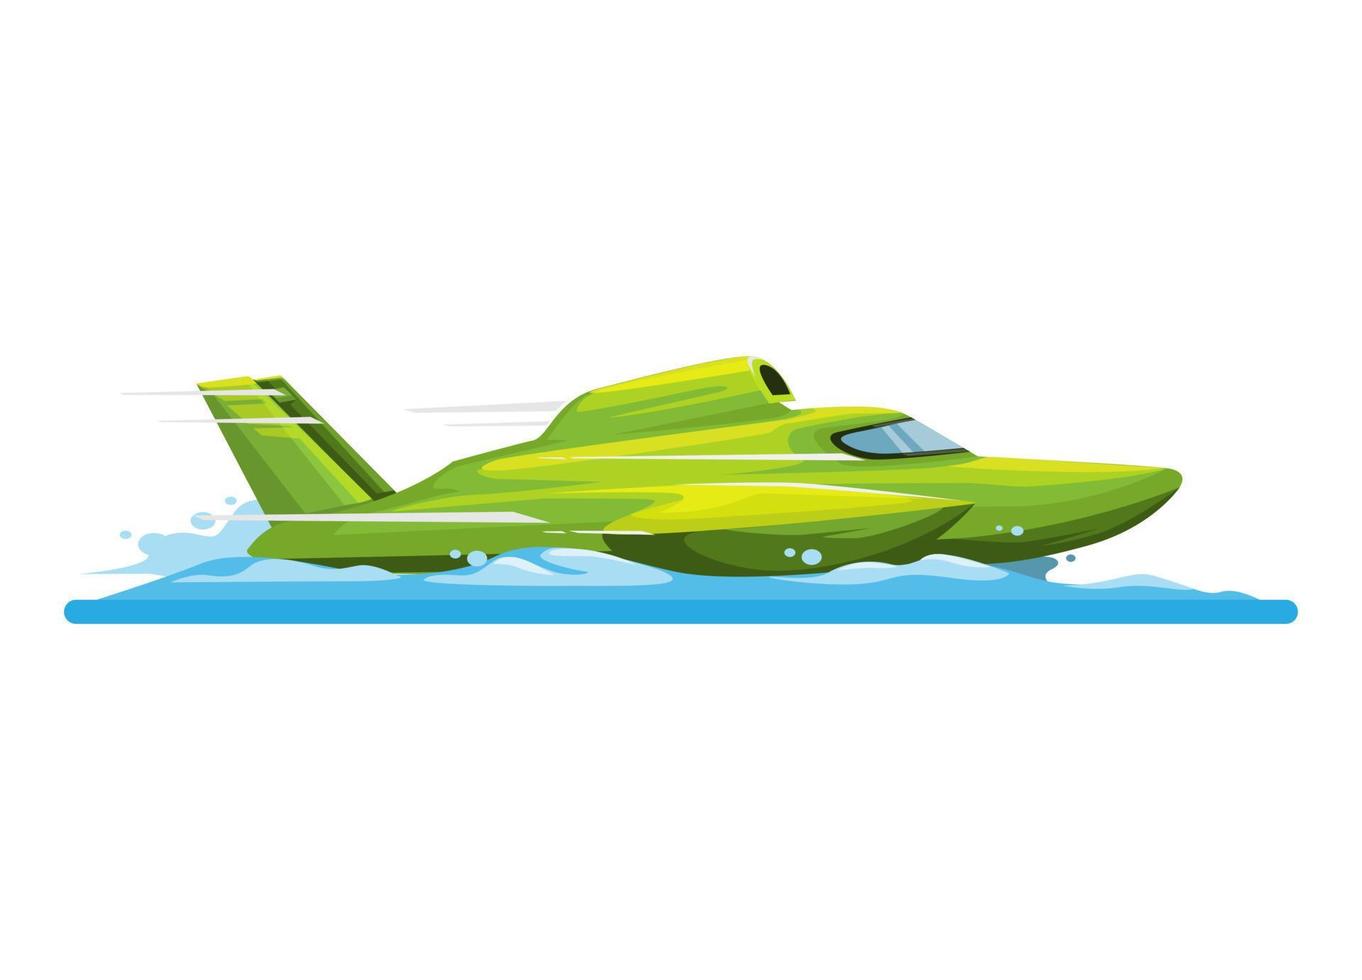 hydroplane boat racing watercraft side view mascot cartoon illustration vector